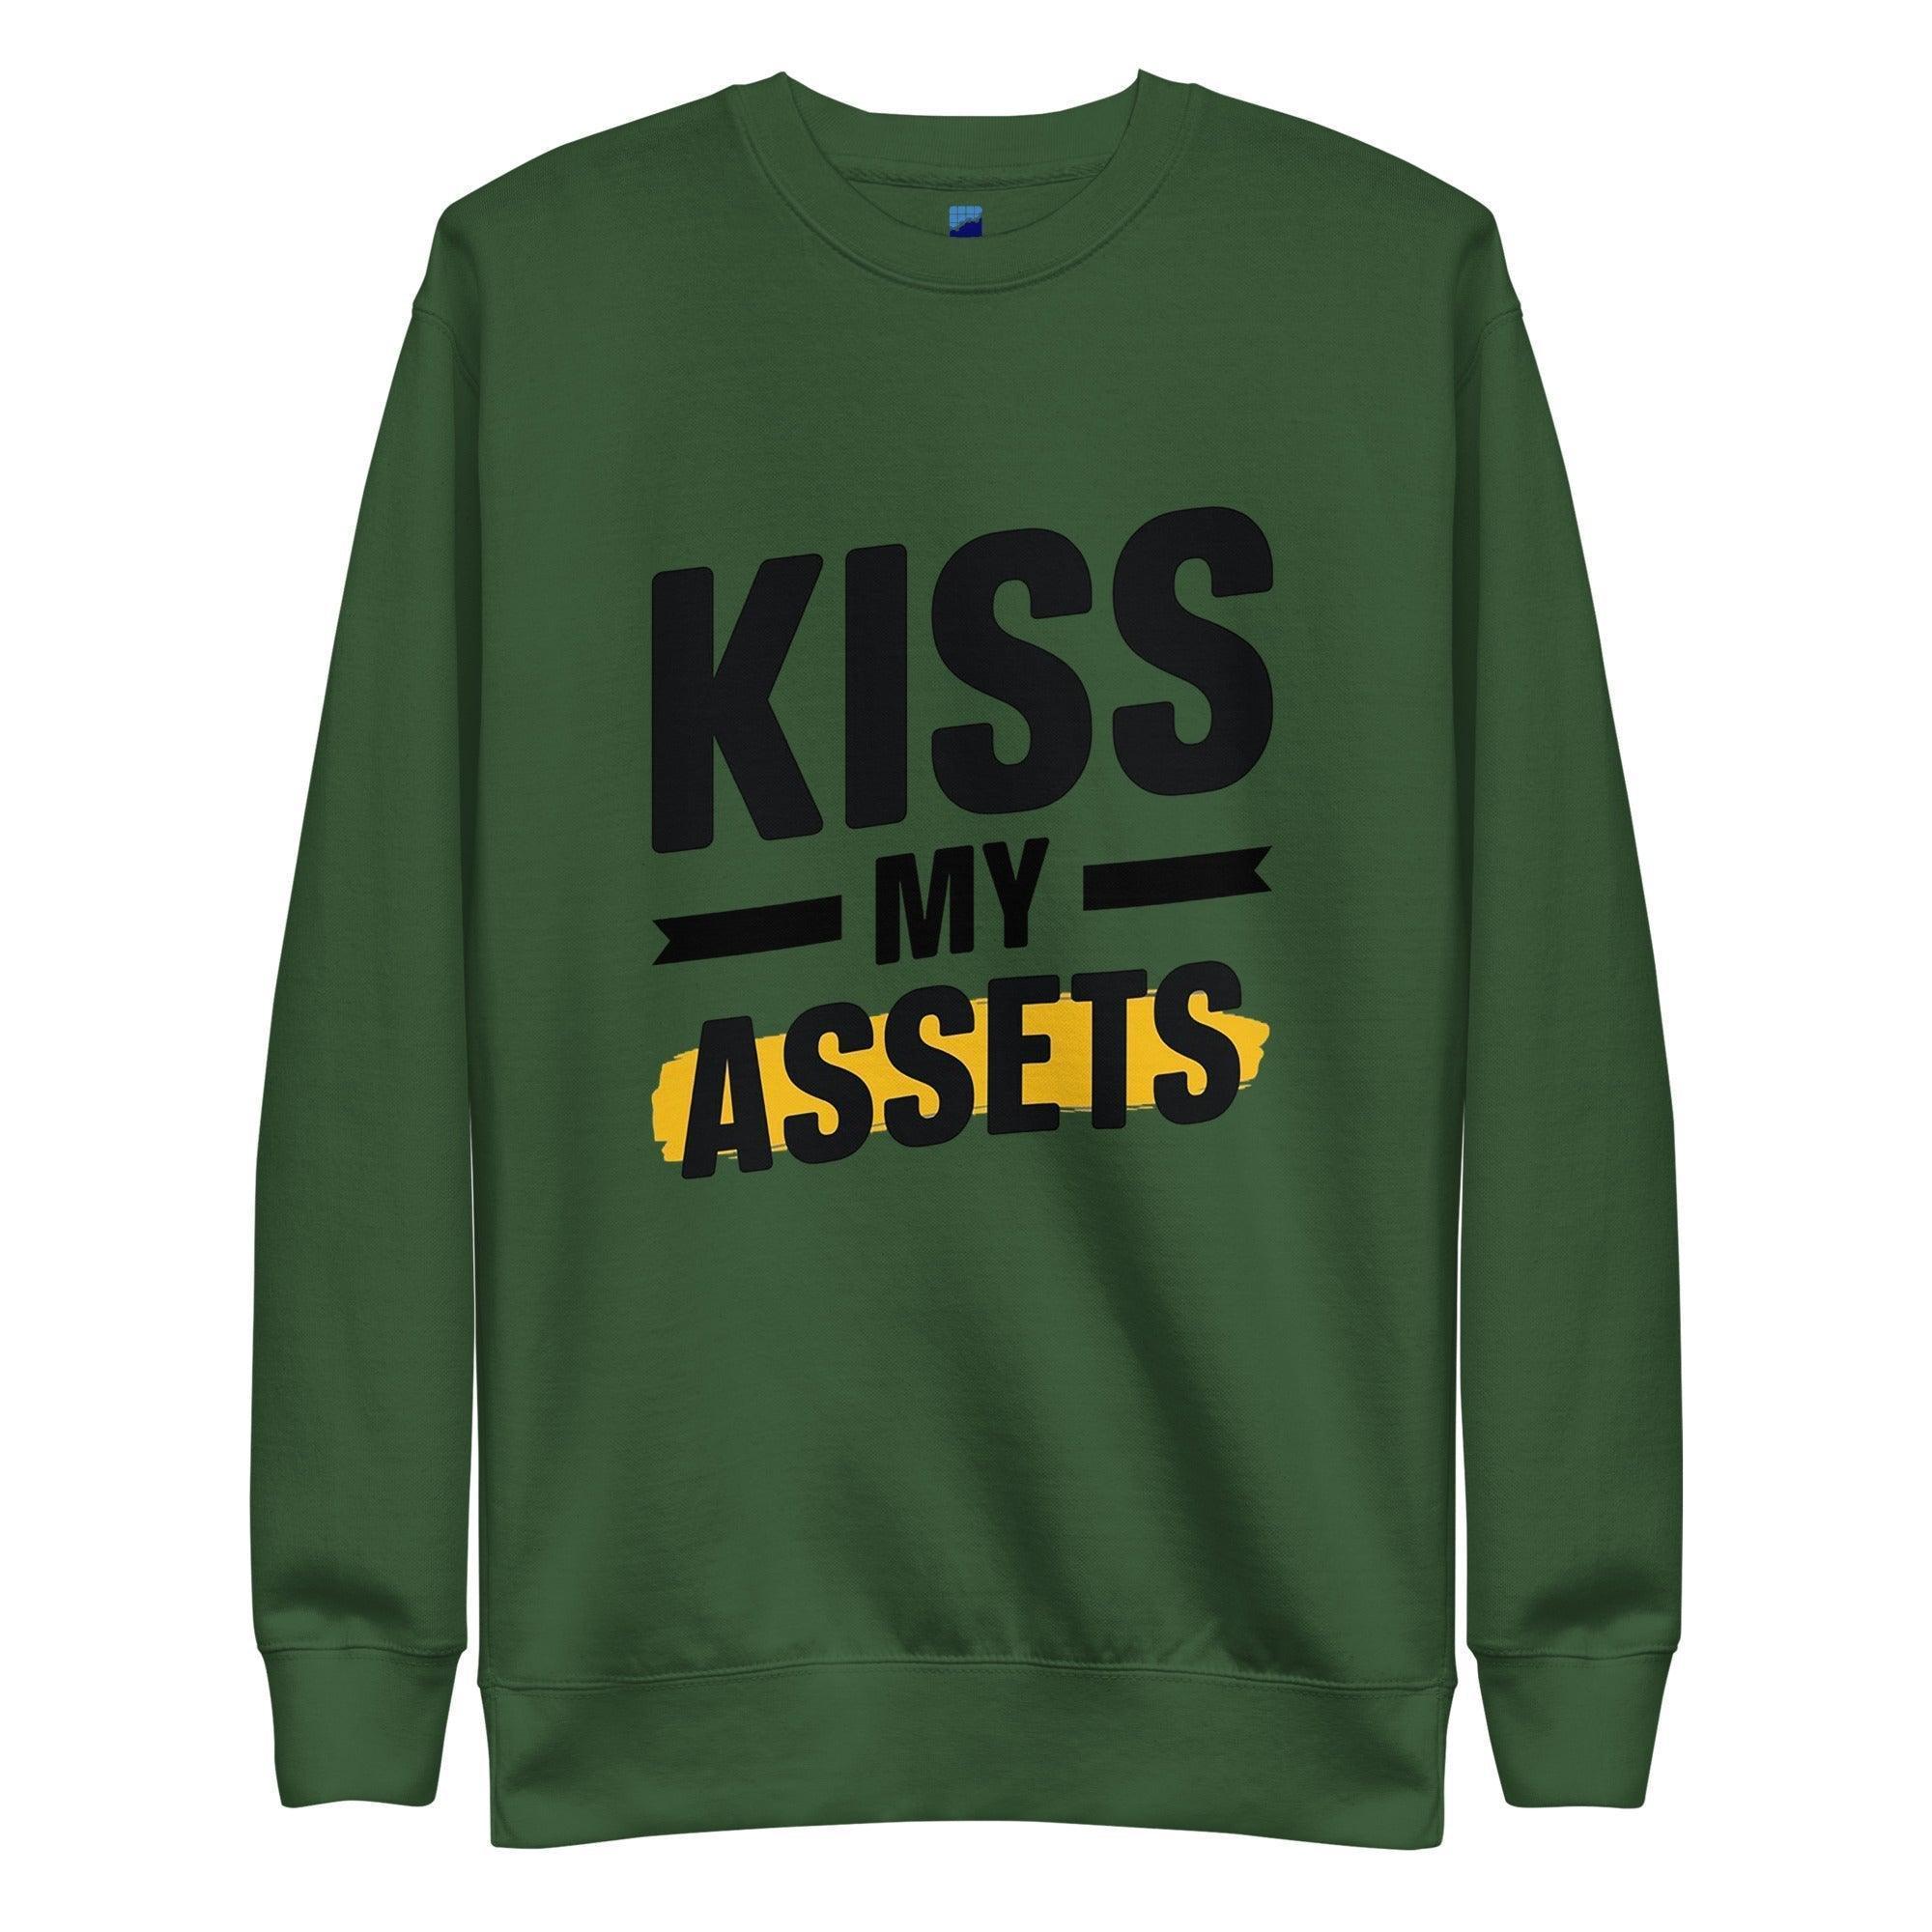 Kiss My Assets Sweatshirt - InvestmenTees